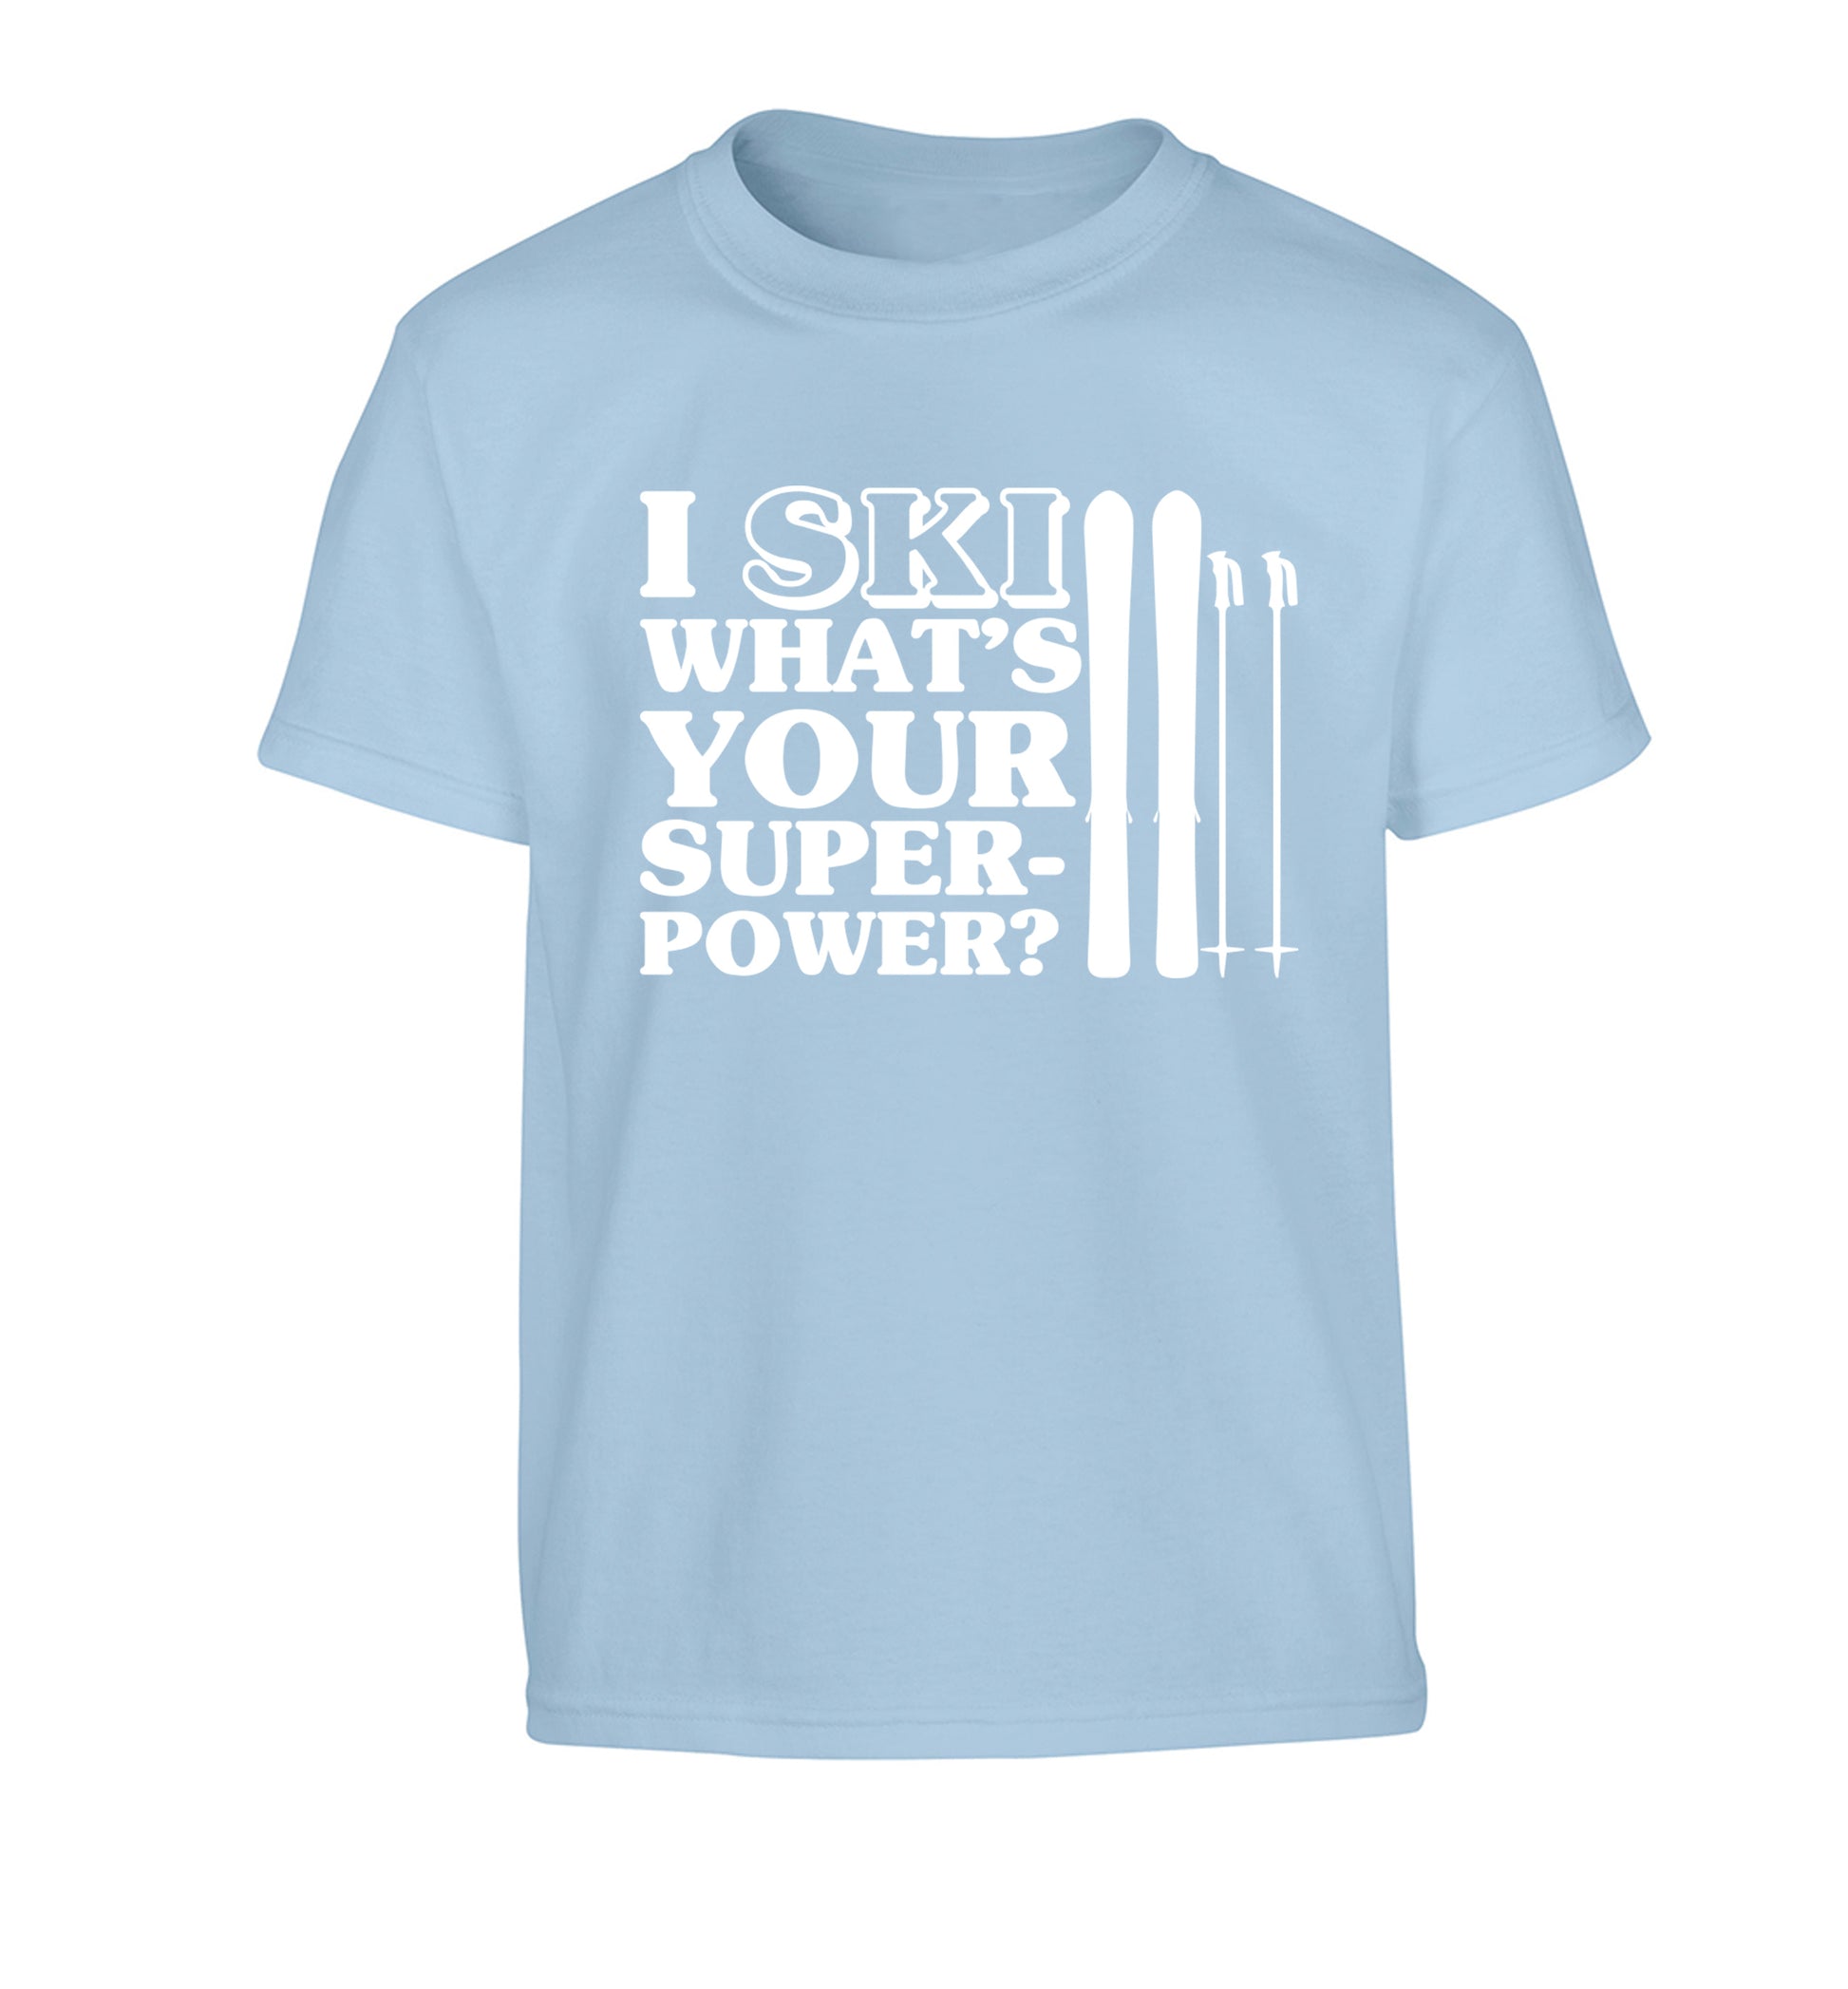 I ski what's your superpower? Children's light blue Tshirt 12-14 Years